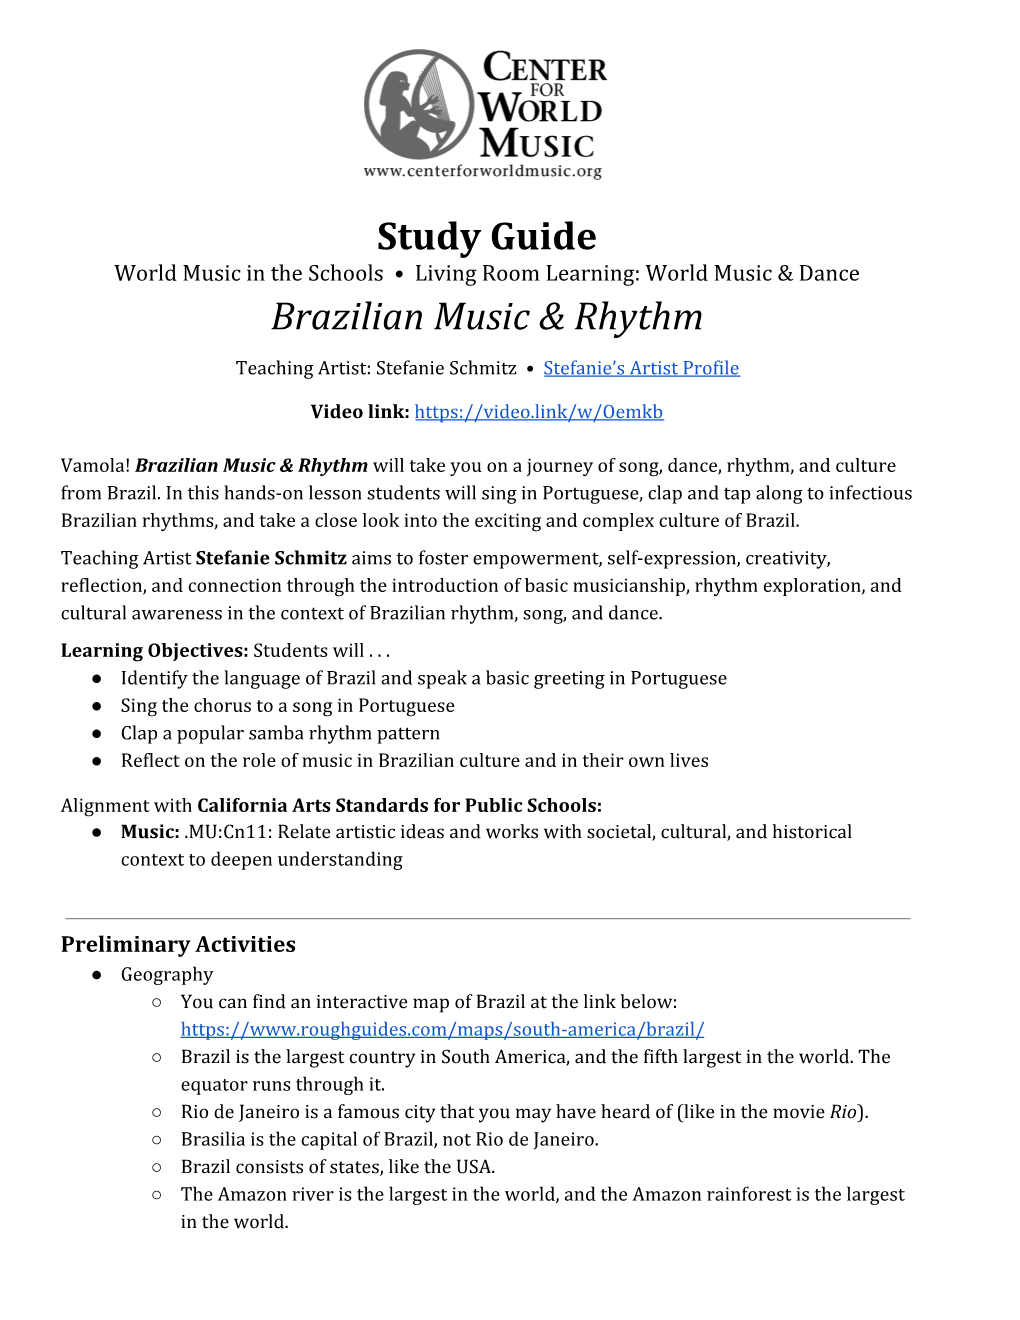 Study Guide for Brazil